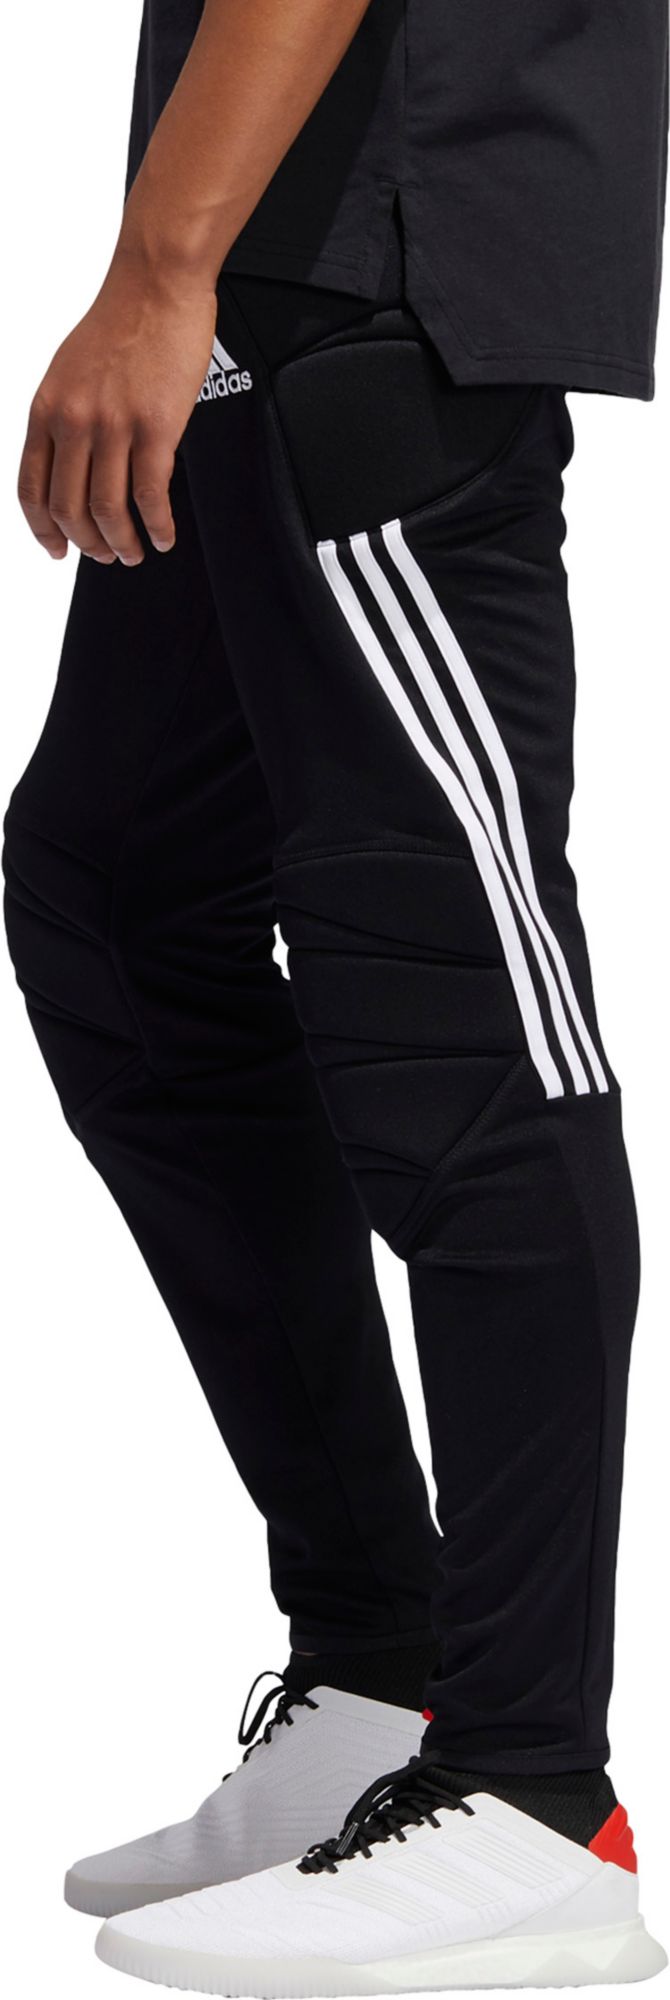 adidas men's tierro goalkeeper soccer pants